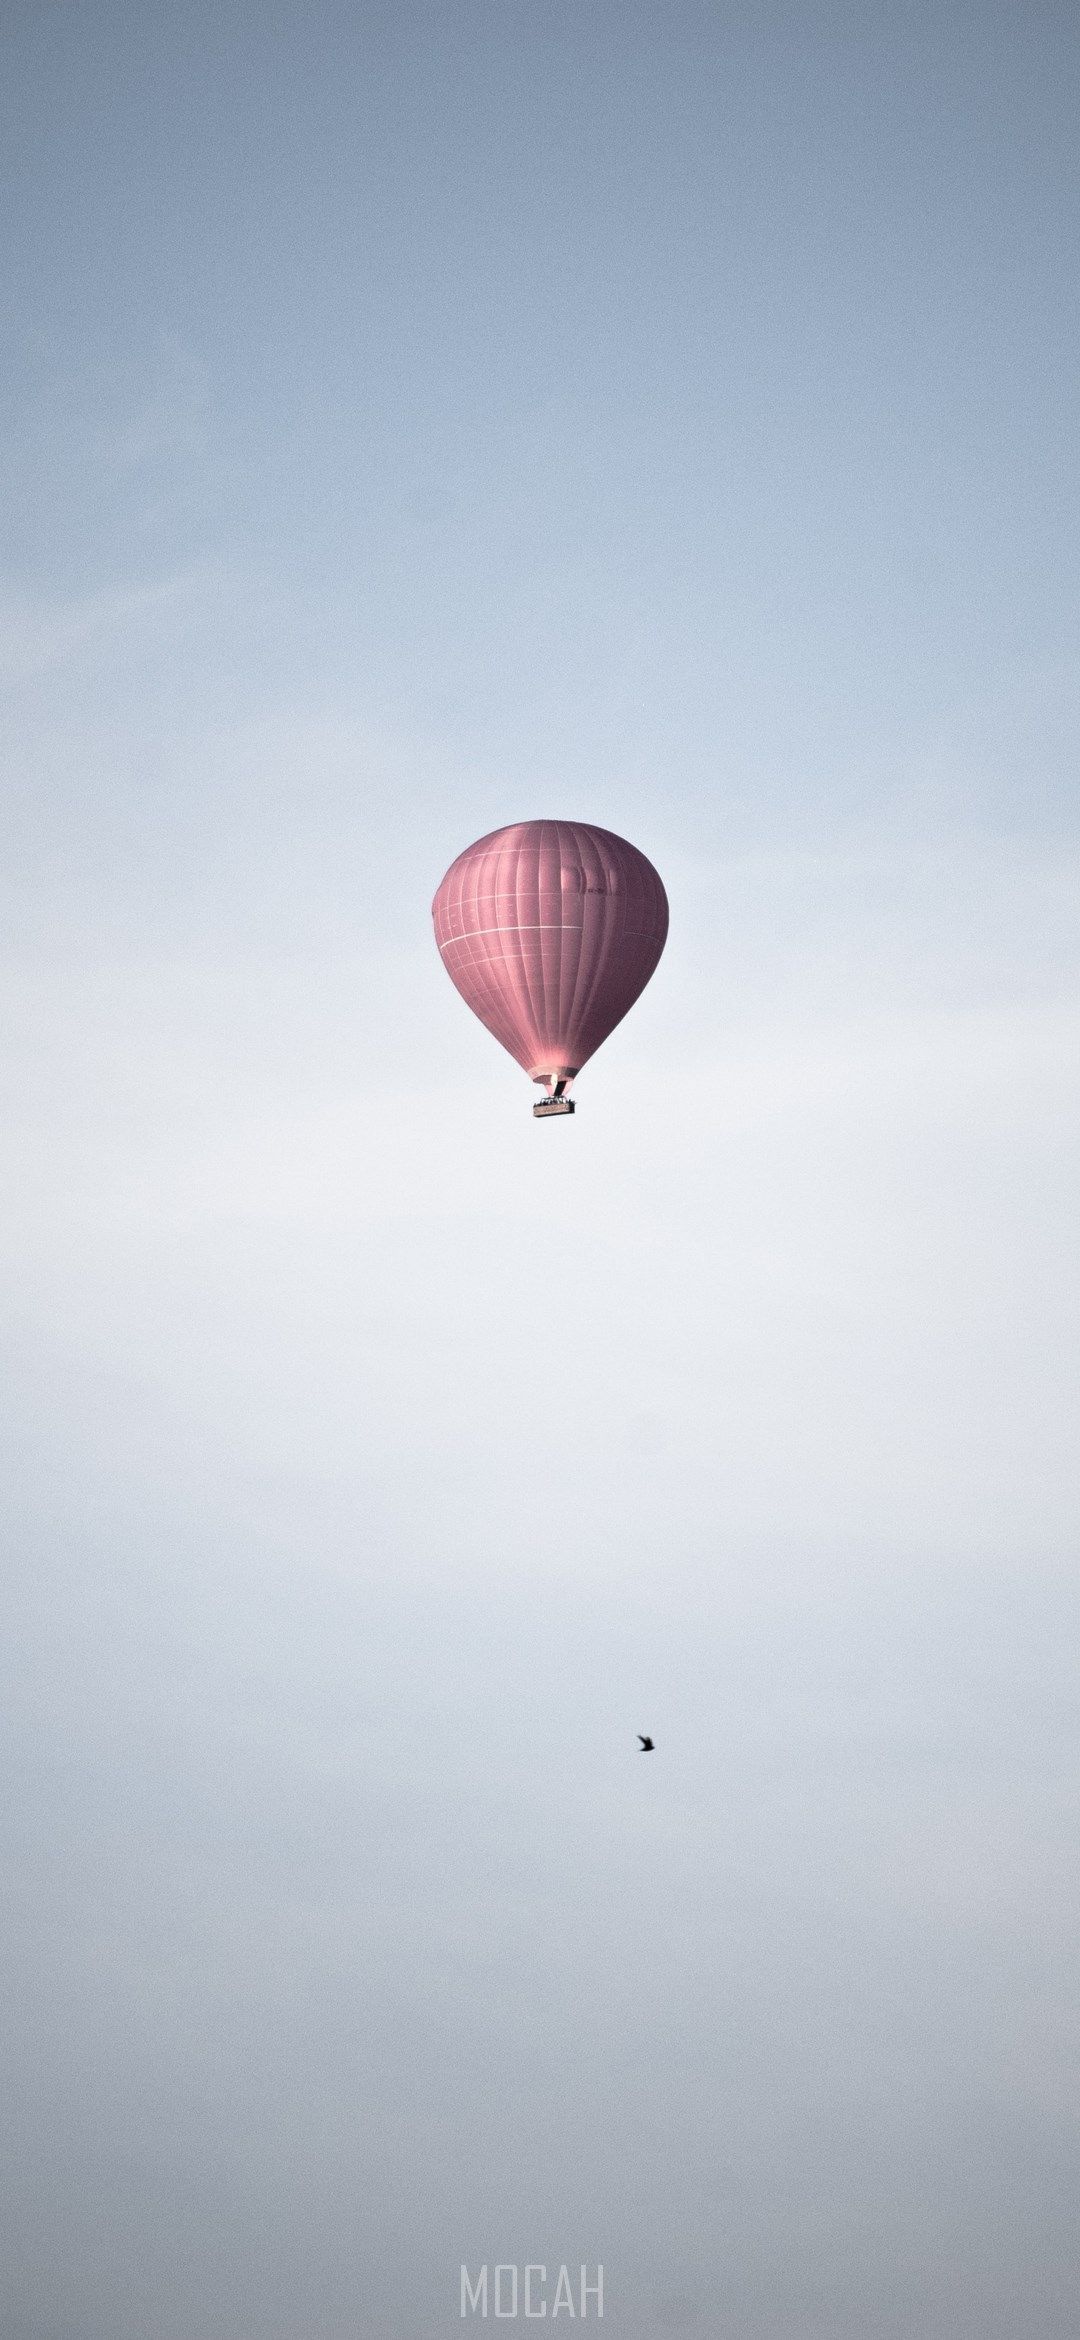 Hot Air Balloon, Balloon, Hot Air Ballooning, Pink, Air Sports, Xiaomi Redmi K20 Pro wallpaper download, 1080x2340 Gallery HD Wallpaper